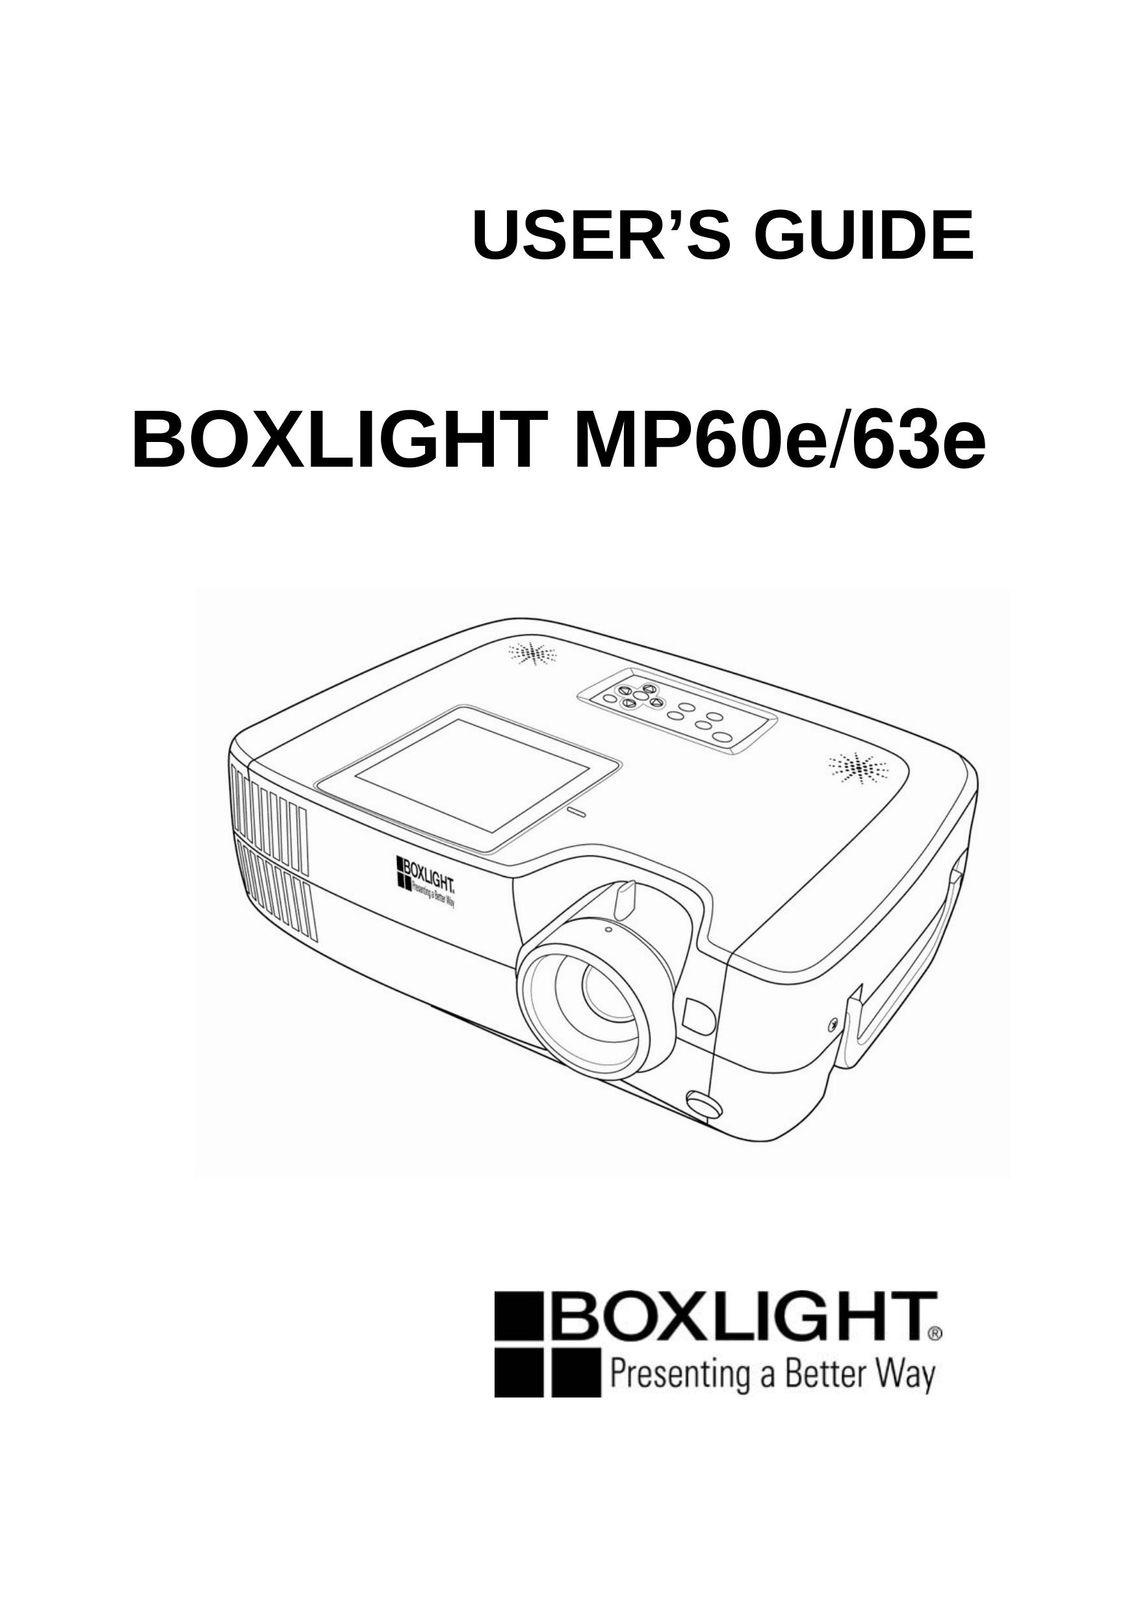 BOXLIGHT MP60e Projector User Manual